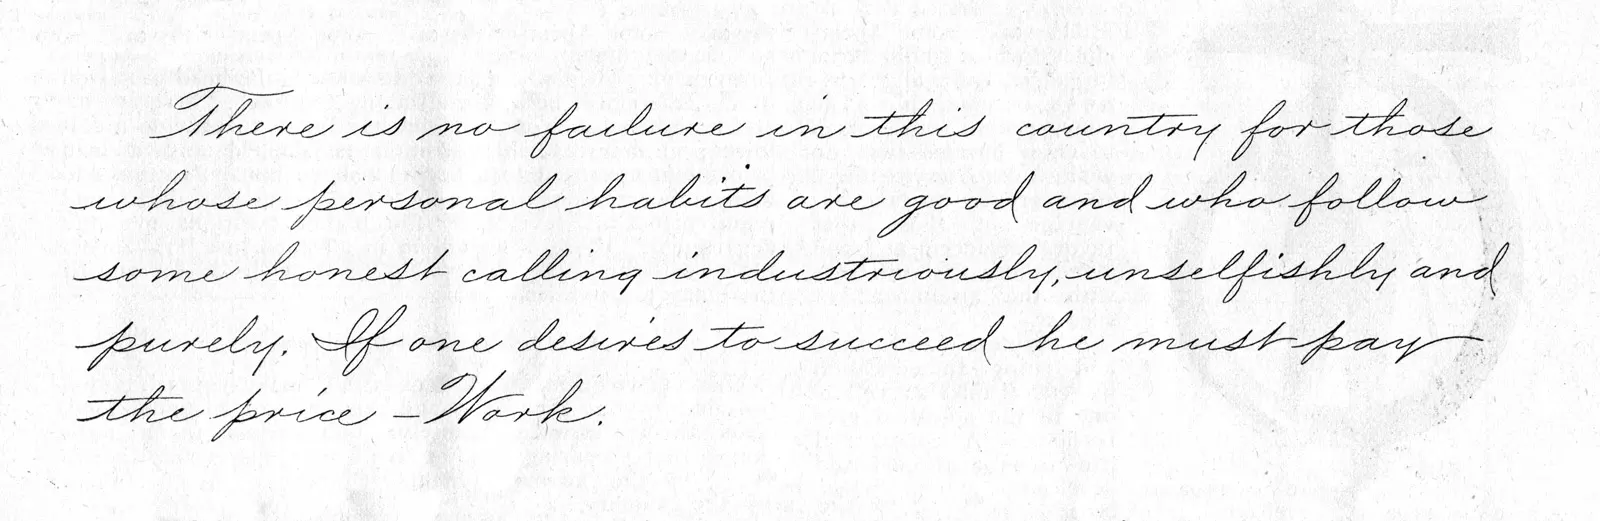 A copy slip of business penmanship written by Francis B. Courtney